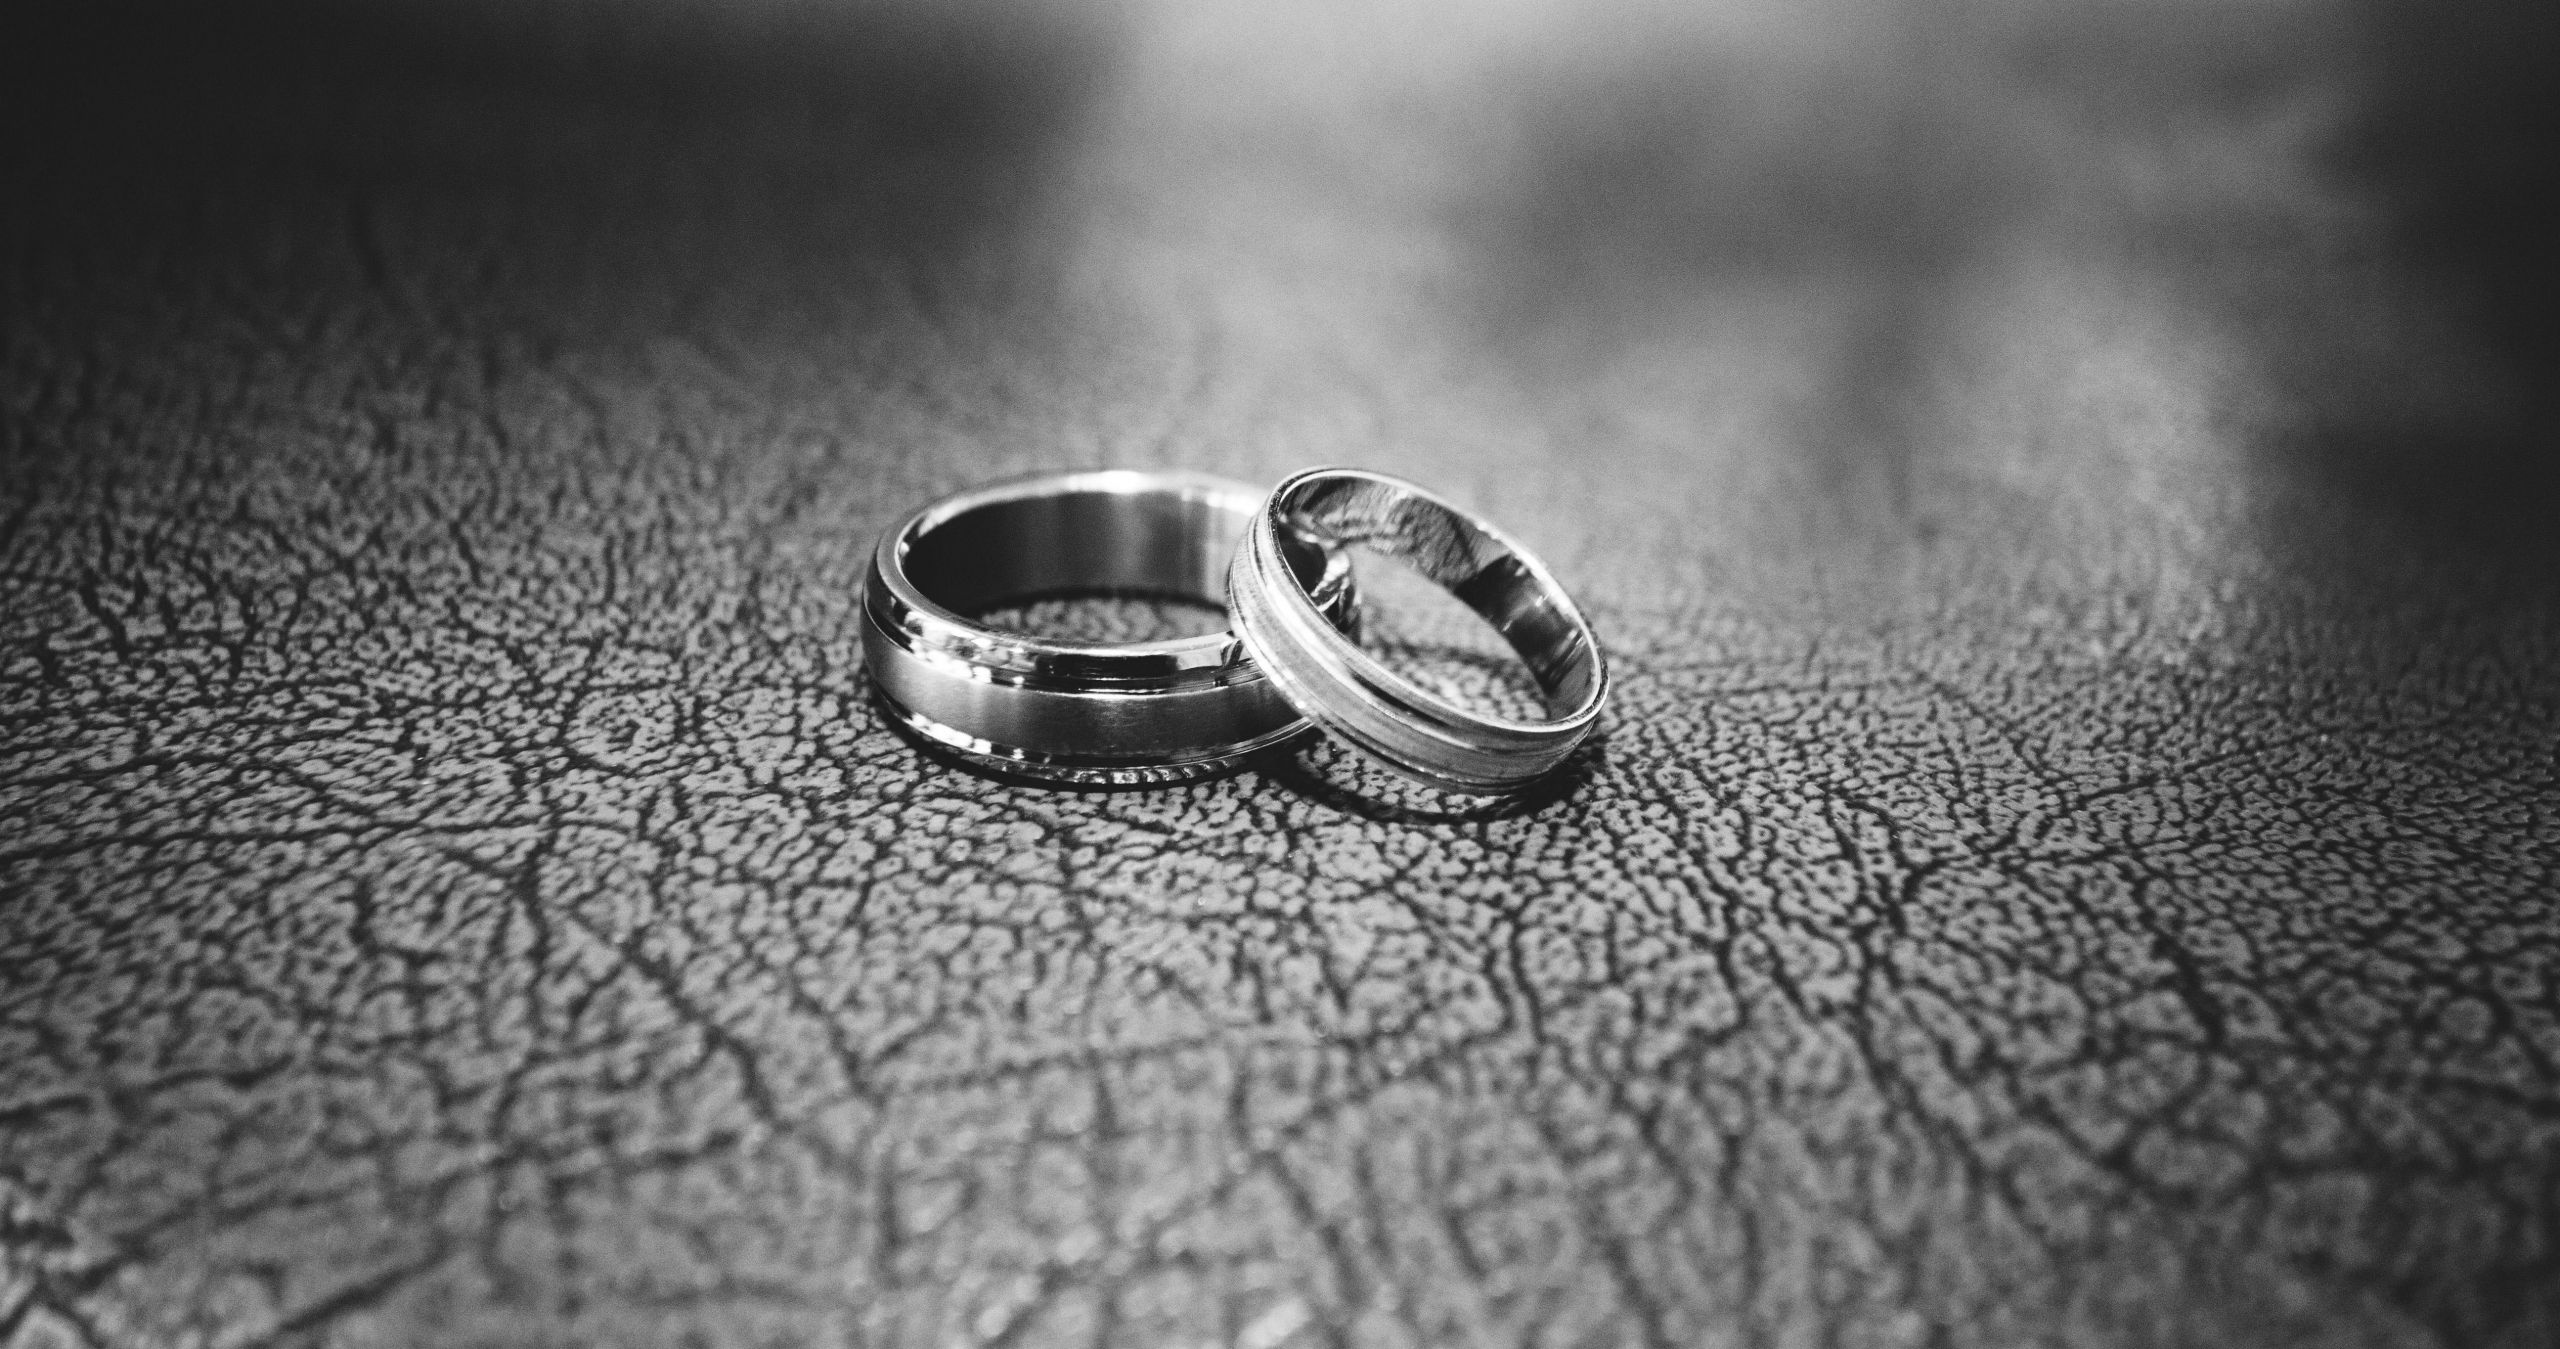 Black And White Wedding Rings
 500 Engaging Wedding Rings s · Pexels · Free Stock